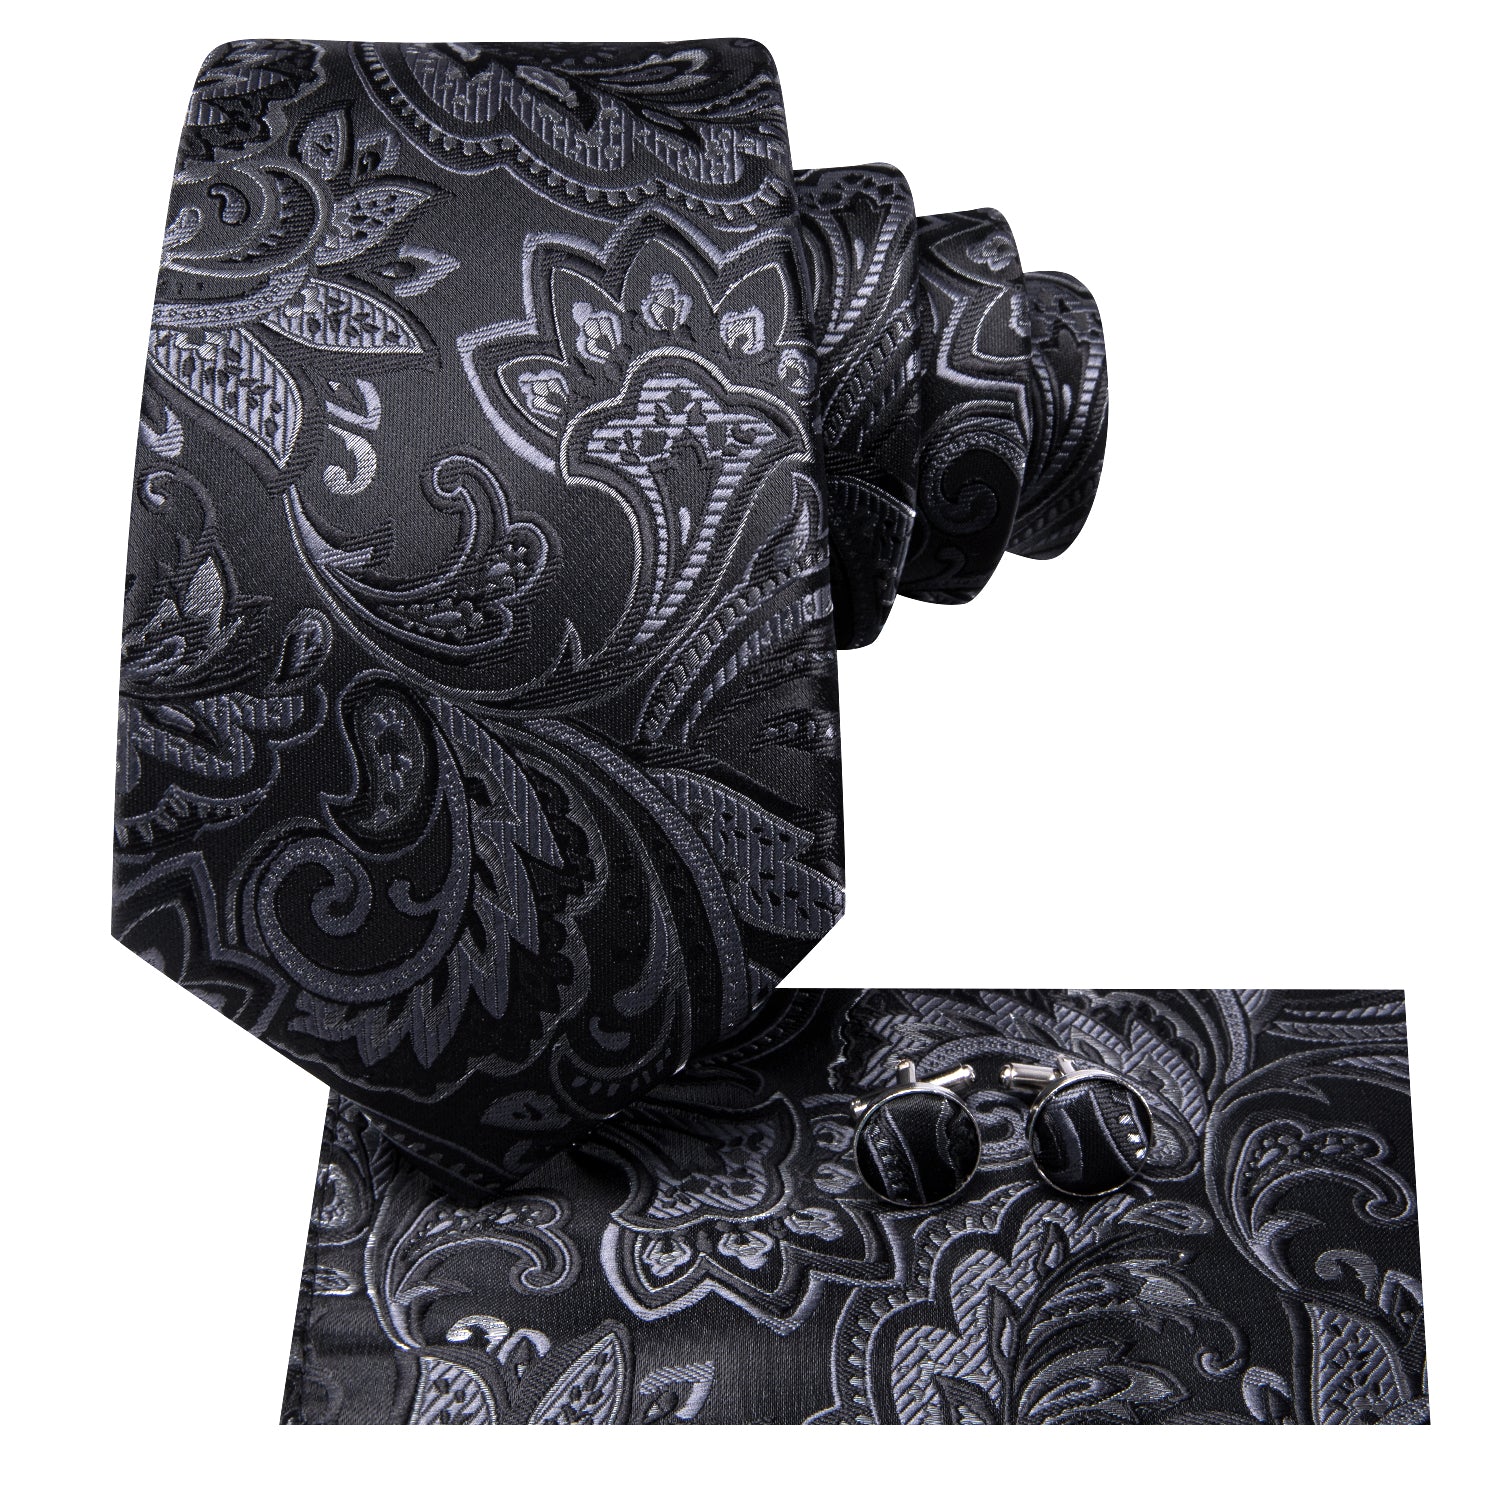 Hi-Tie Black Grey Paisley Men's Tie Pocket Square Cufflinks Set